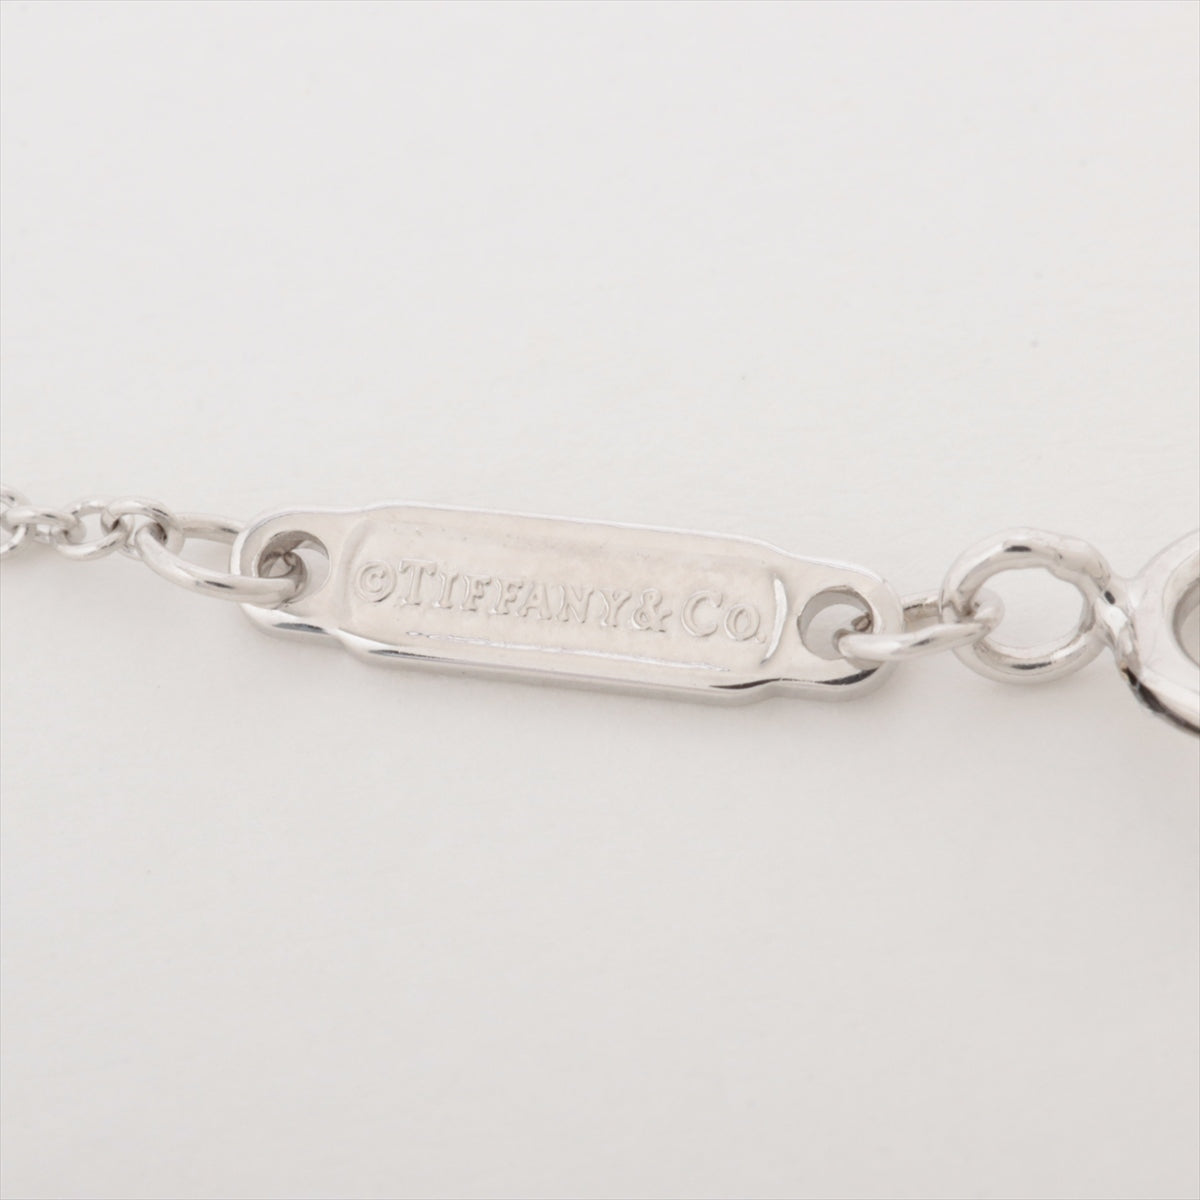 Tiffany T Smile Micro diamond Necklace 750(WG) 2.4g